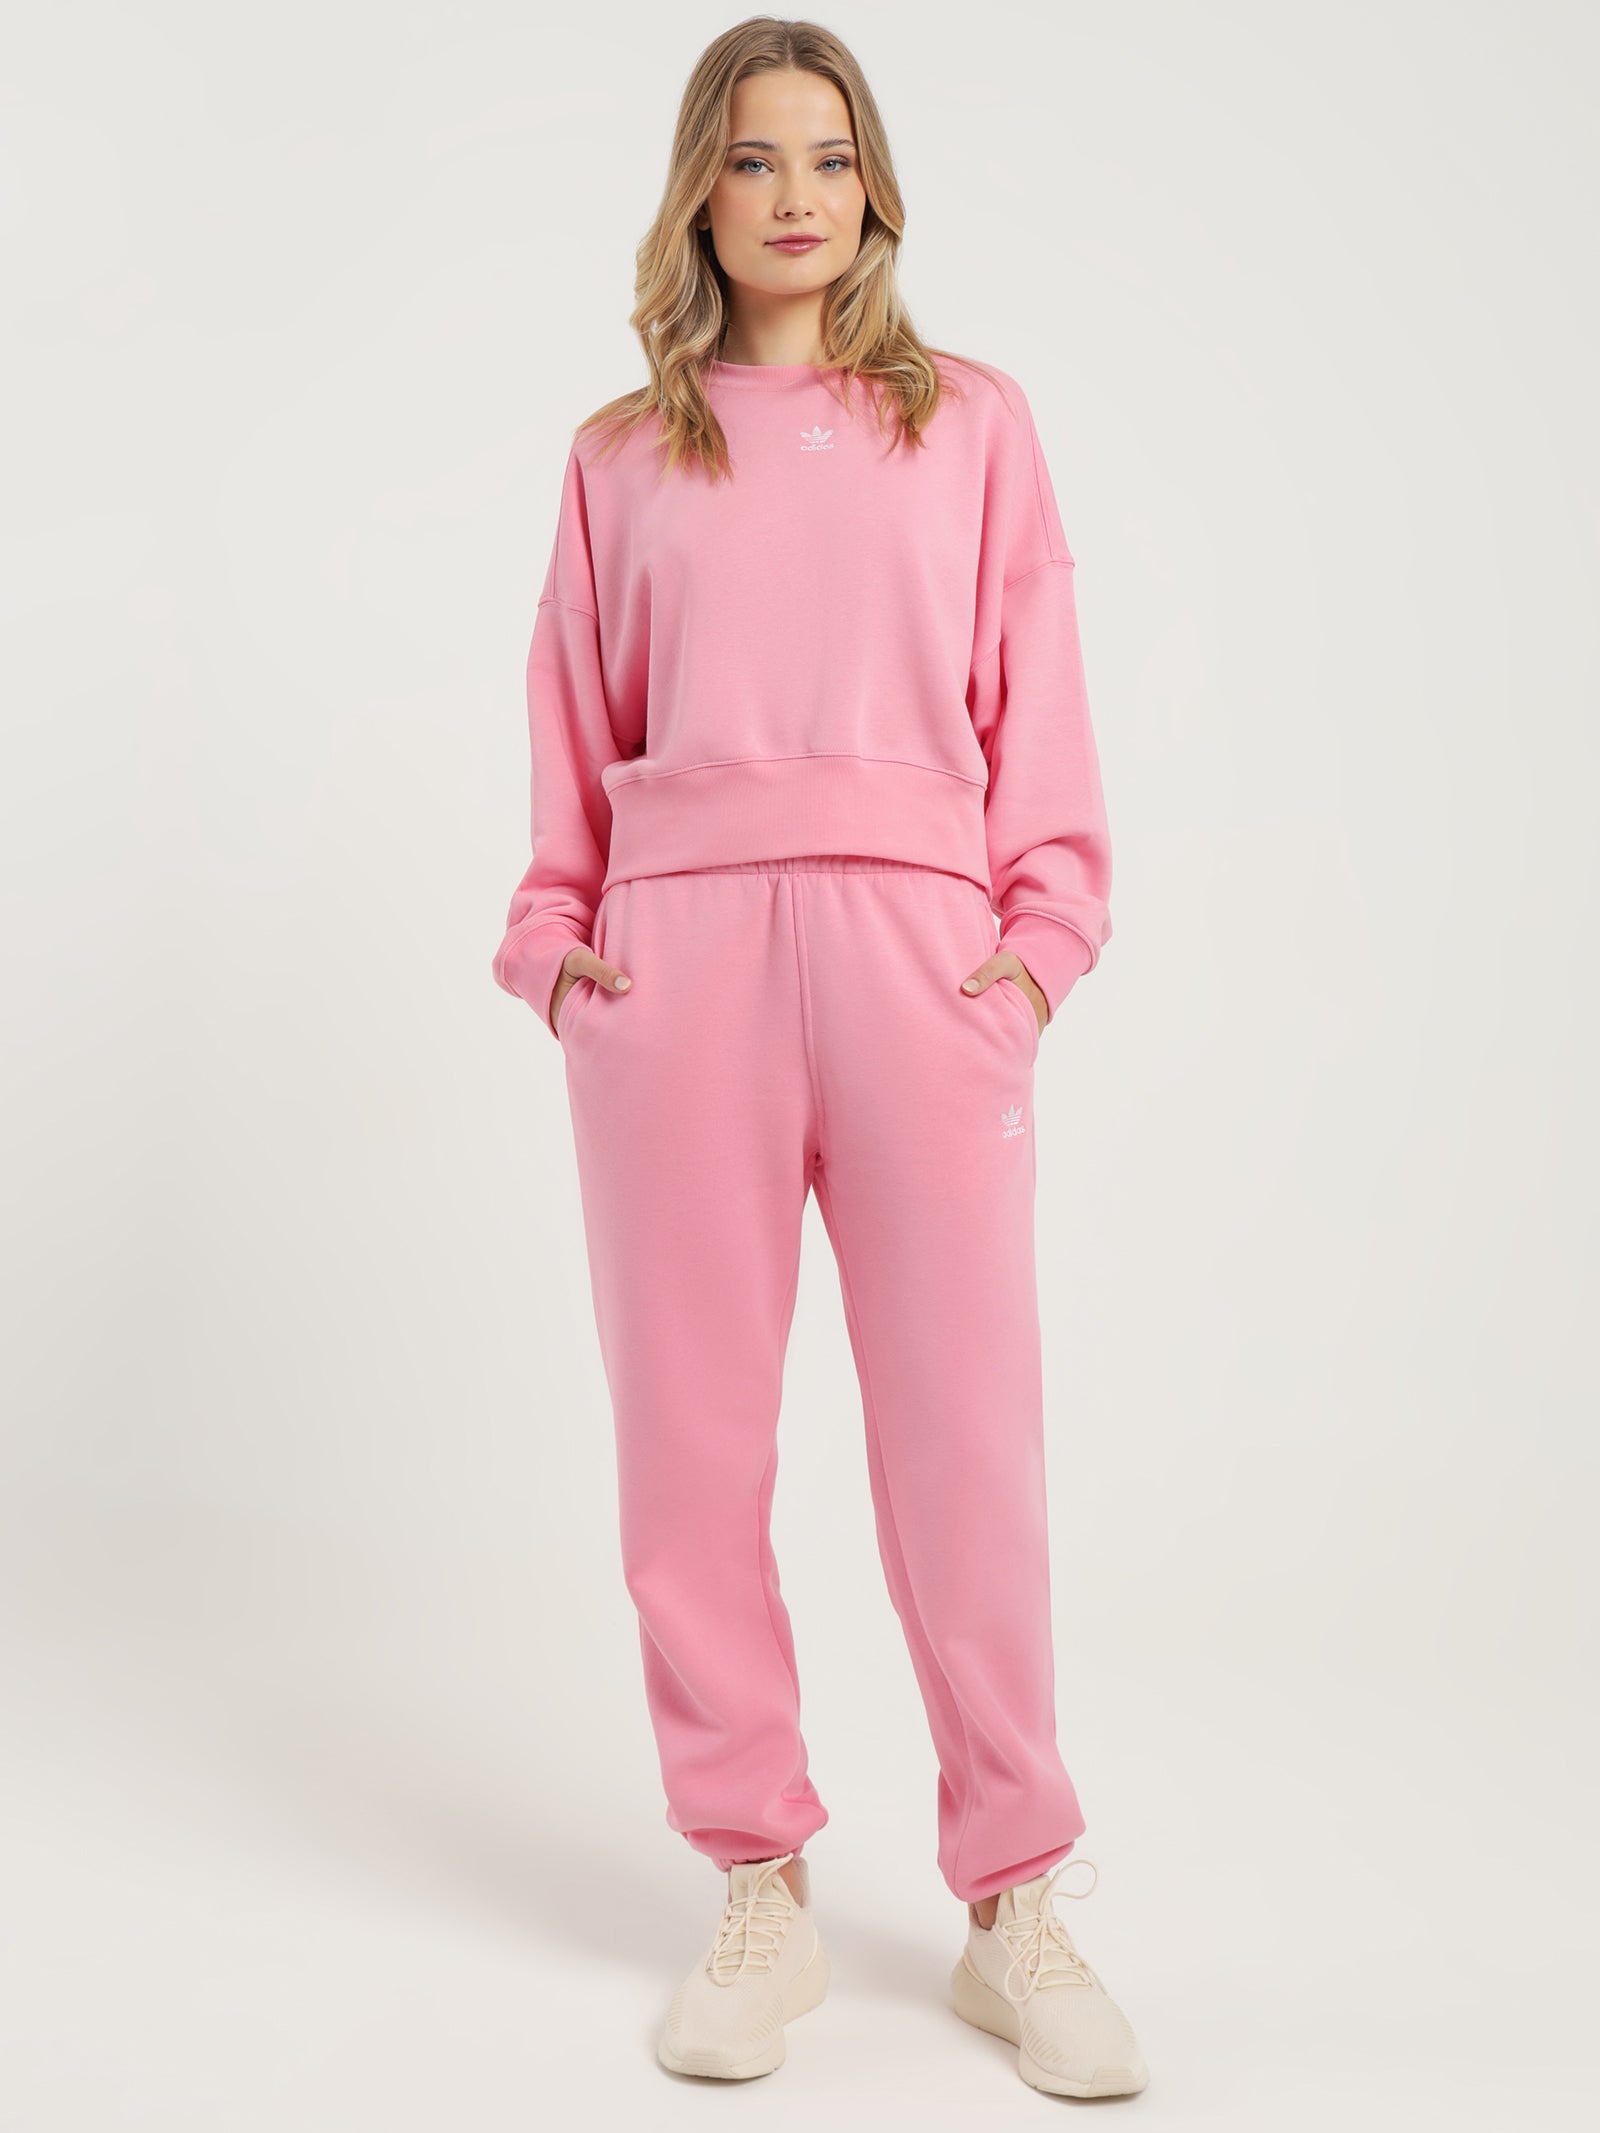 Adicolor Essentials Fleece Joggers in Bliss Pink - Glue Store